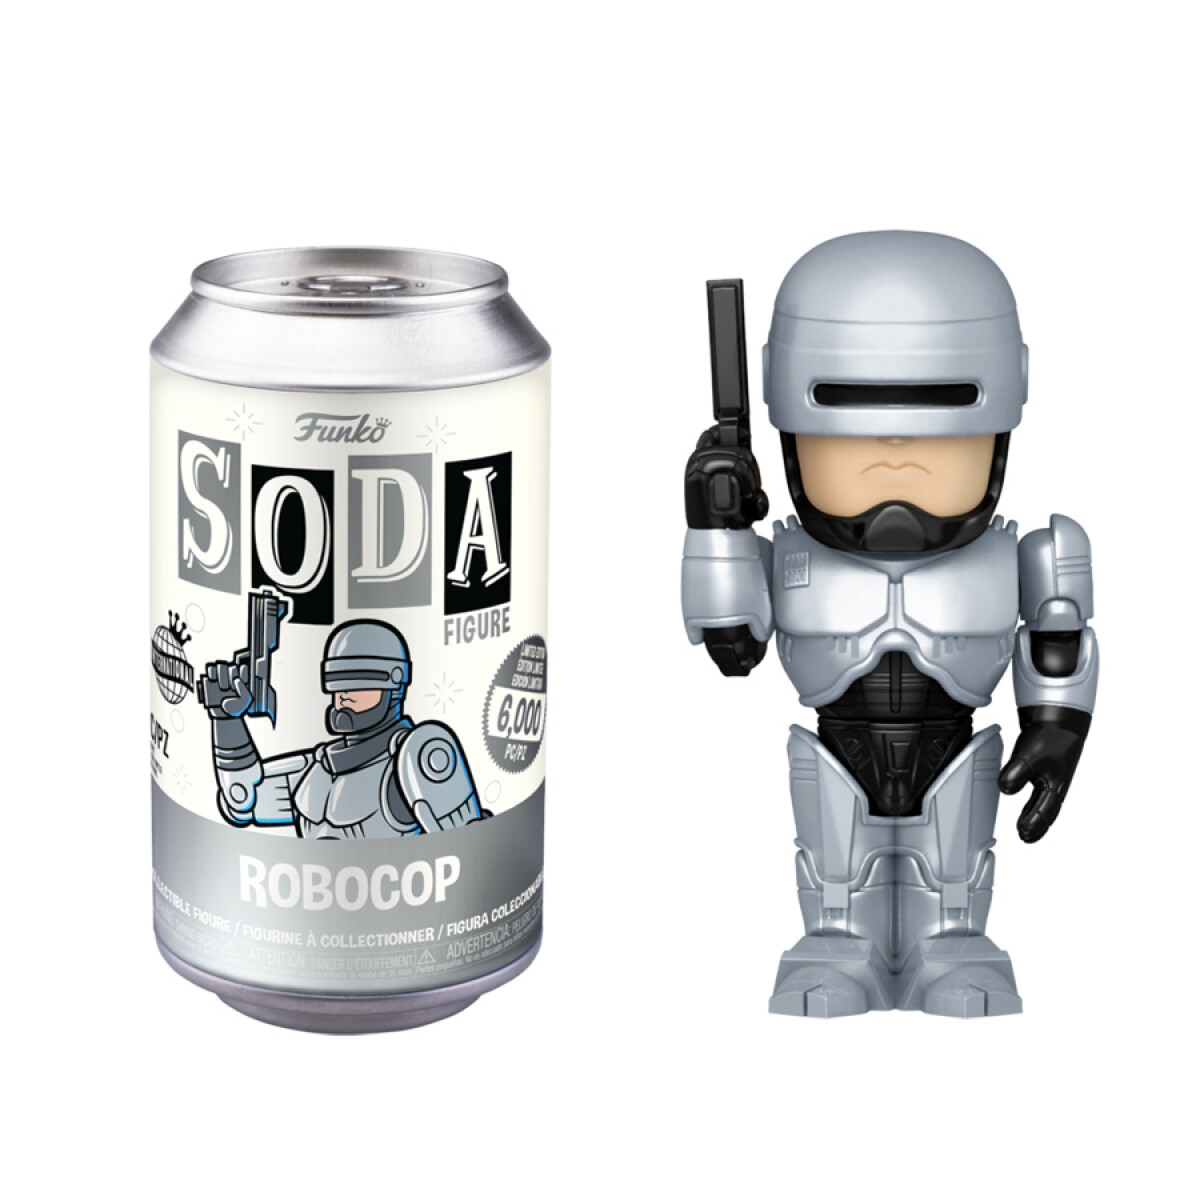 Robocop · Funko Soda Vynl 